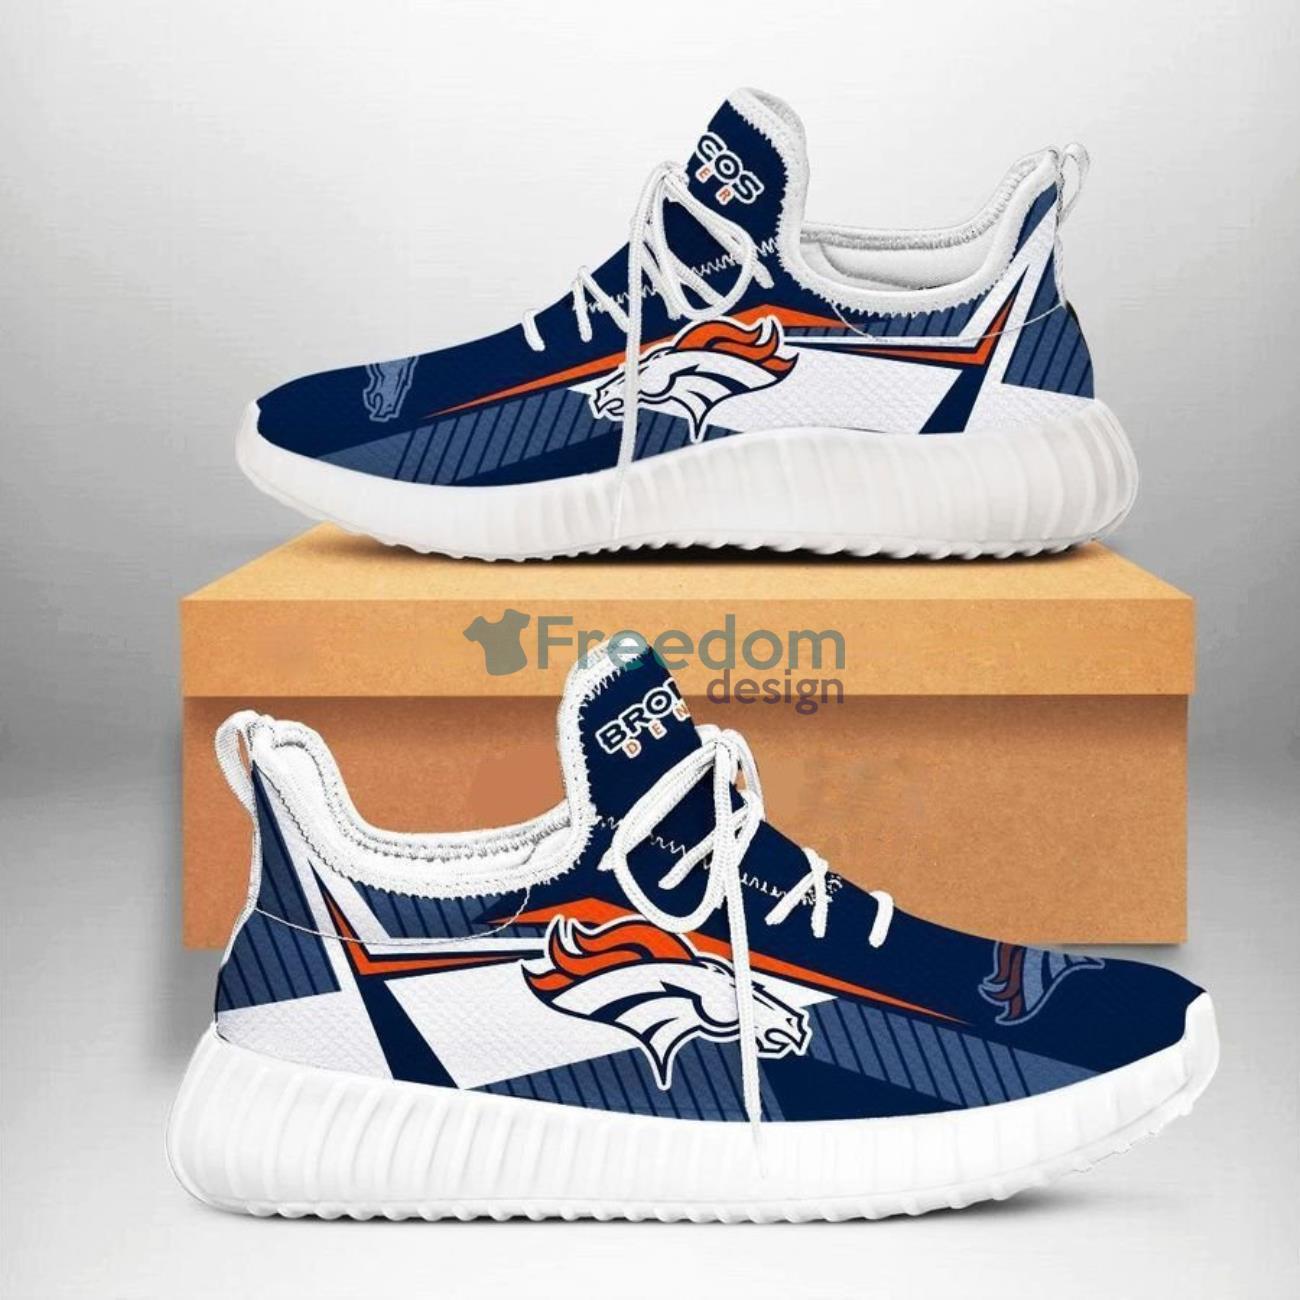 Denver Broncos Team Sneaker Reze Shoes For Fans